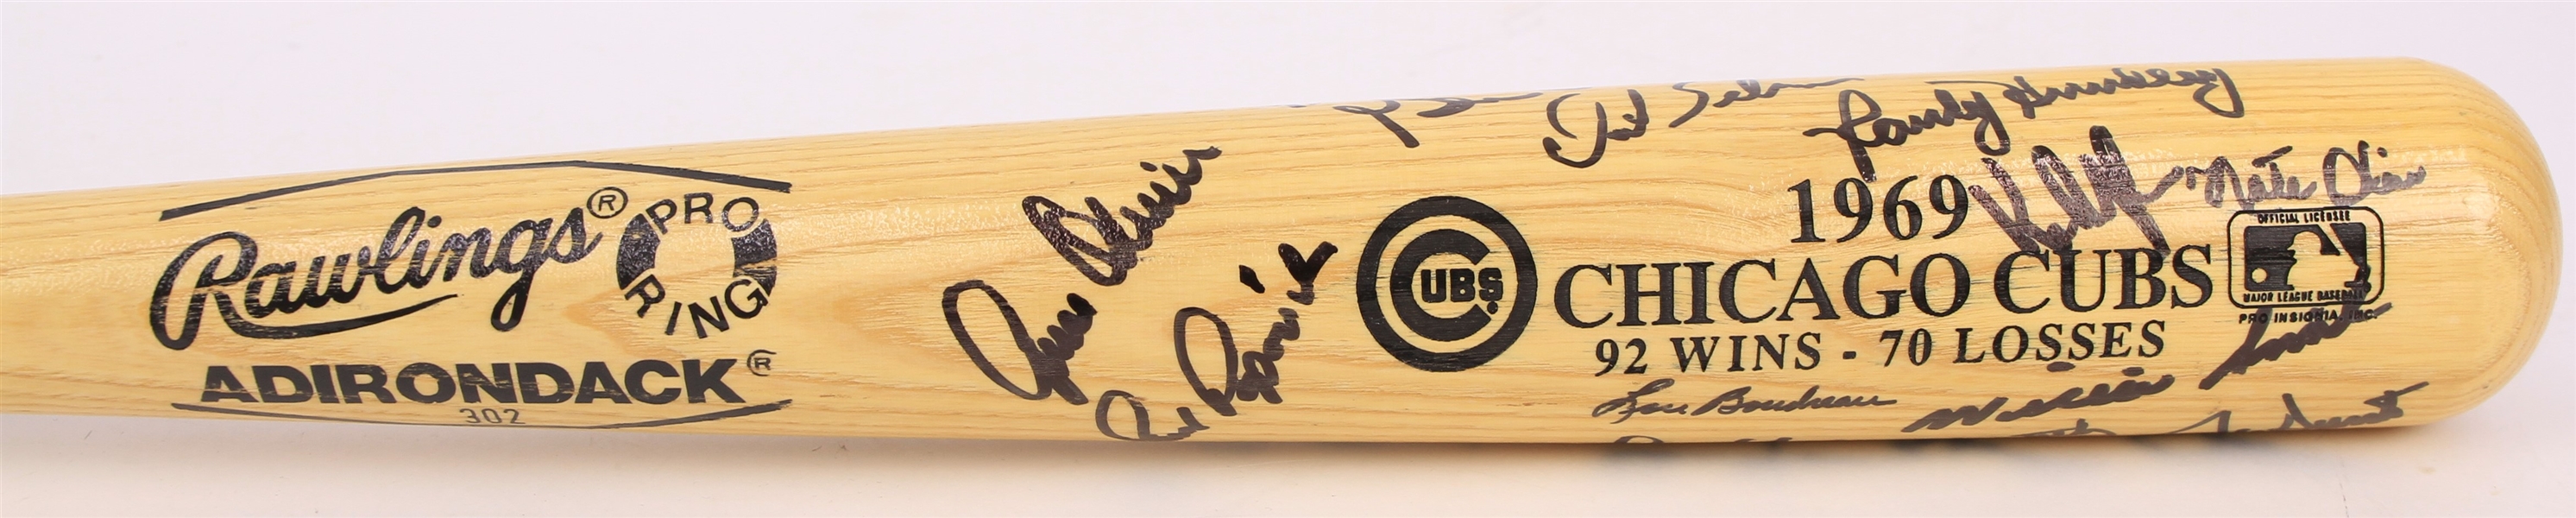 1969 Chicago Cubs Multi Signed Rawlings Adirondack Bat w/ 21 Signatures Including Ernie Banks, Fergie Jenkins, Lou Boudreau & More (JSA) 34/69